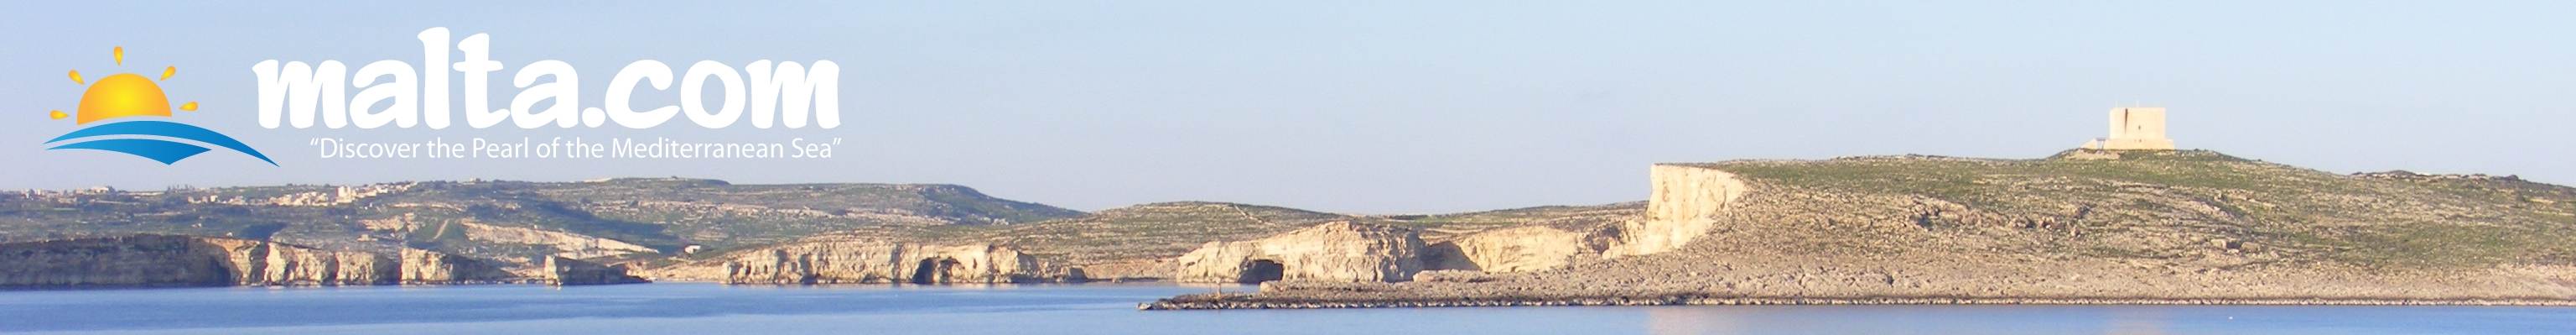 malta - hotel in malta, holidays in malta, car rental in malta